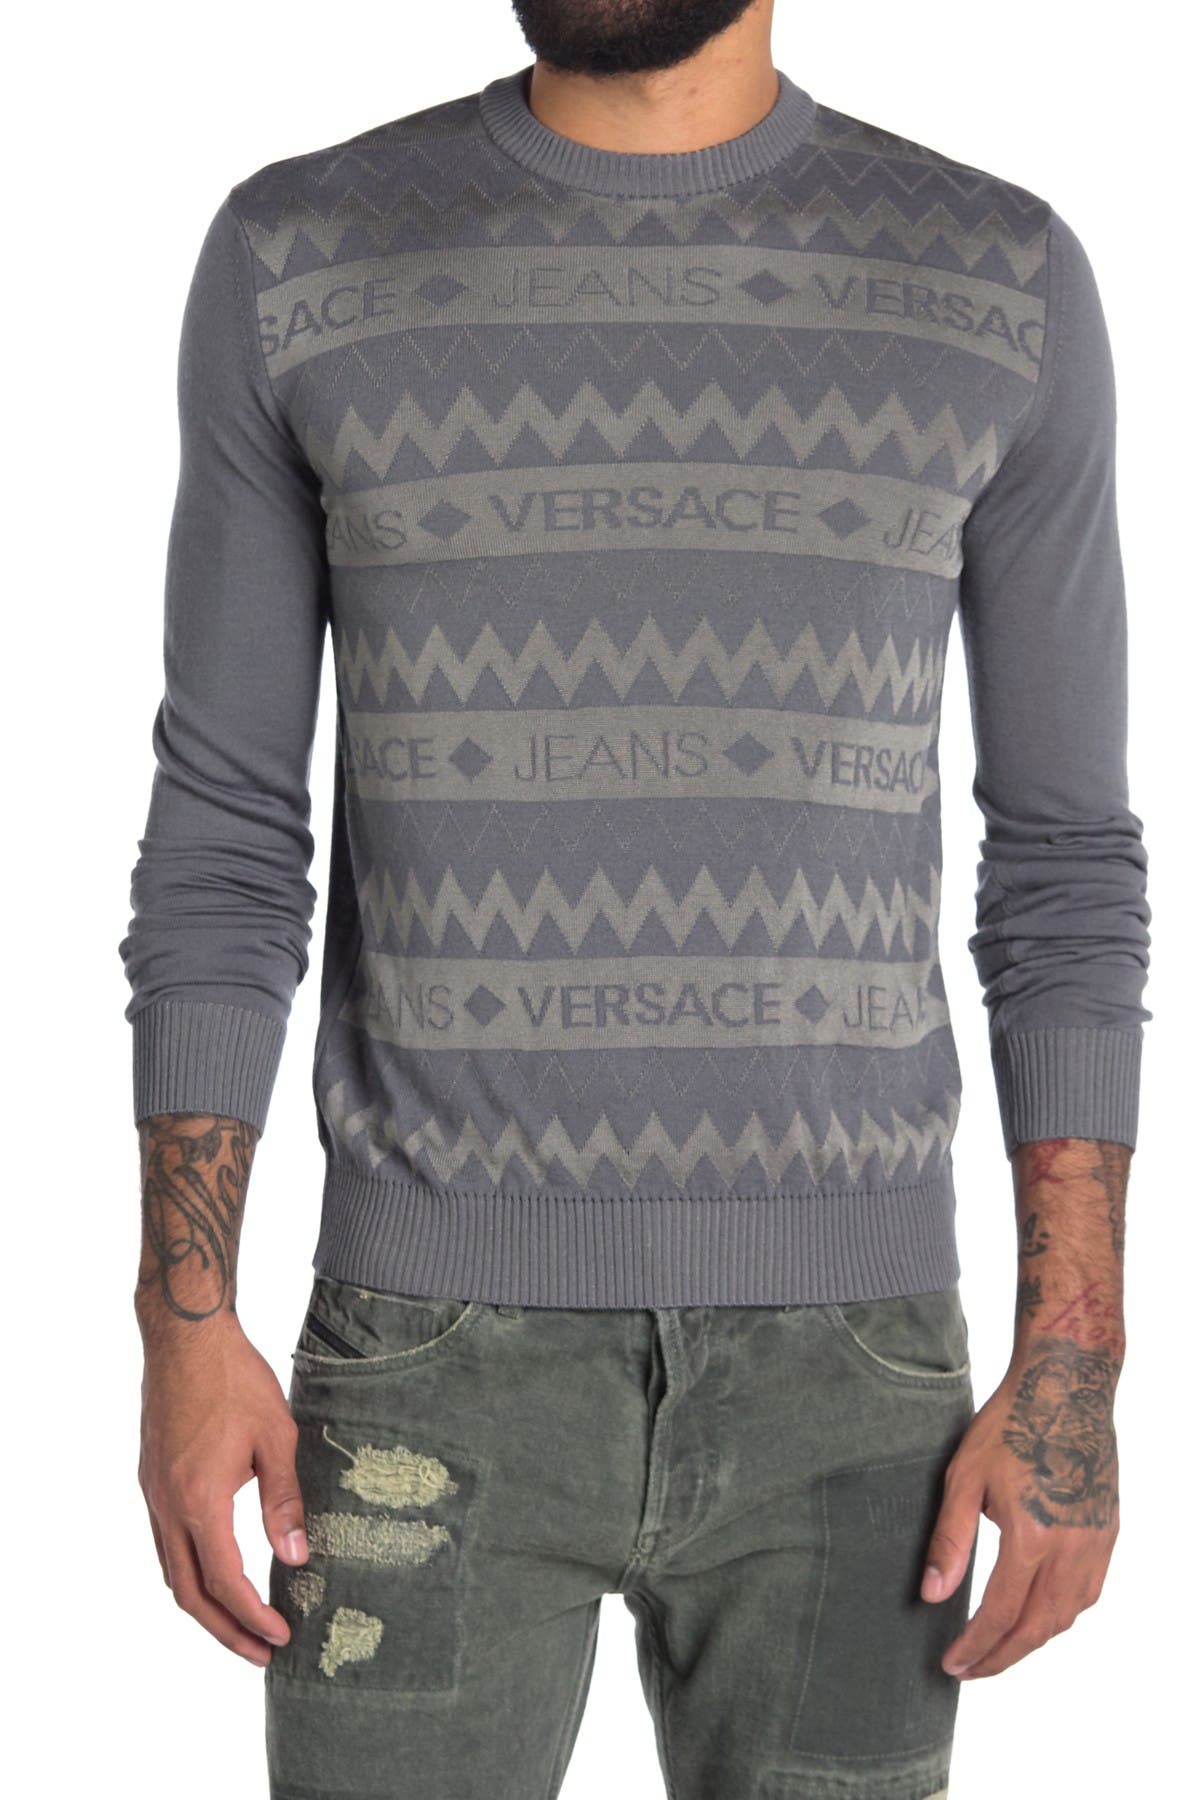 versace crew neck sweater